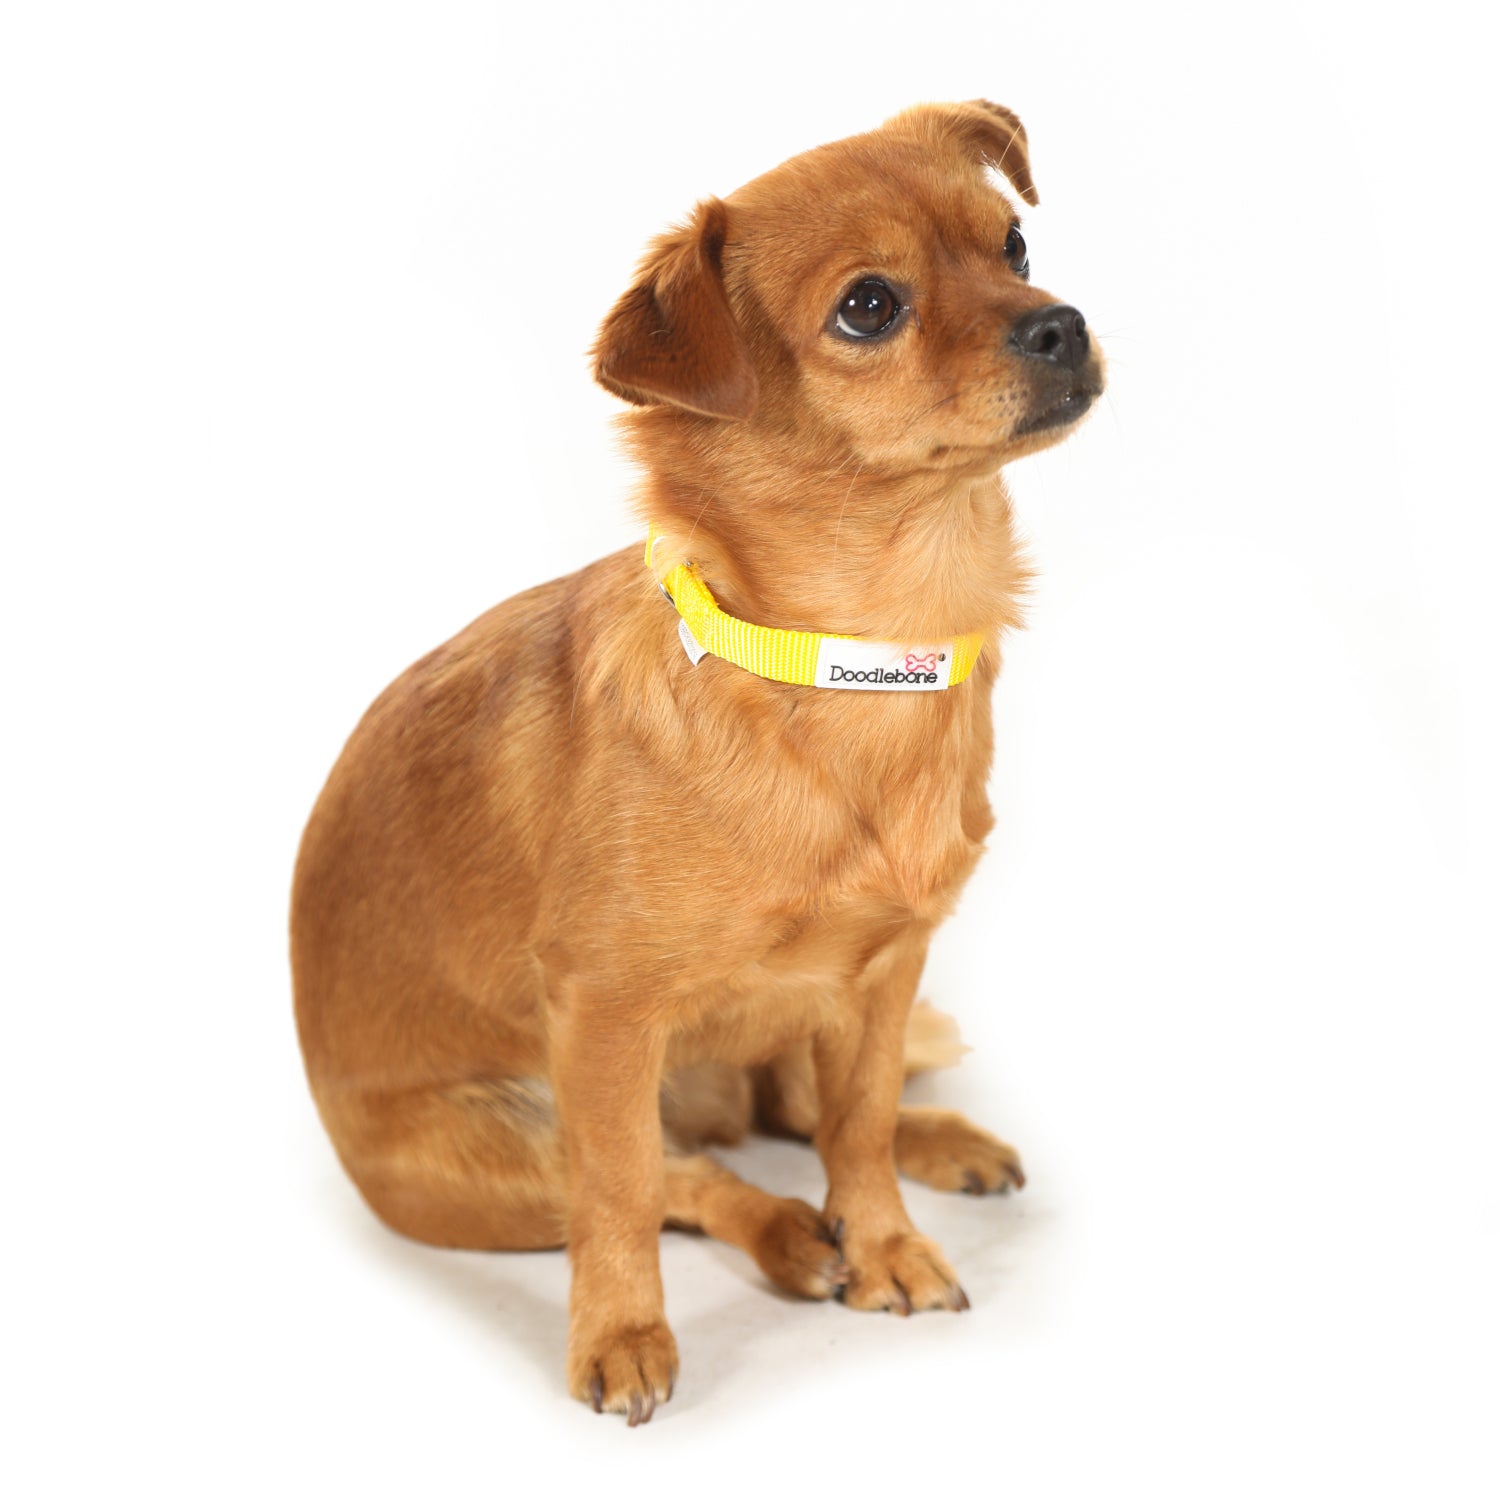 Doodlebone Originals Dog Collar Tangerine 3 Sizes